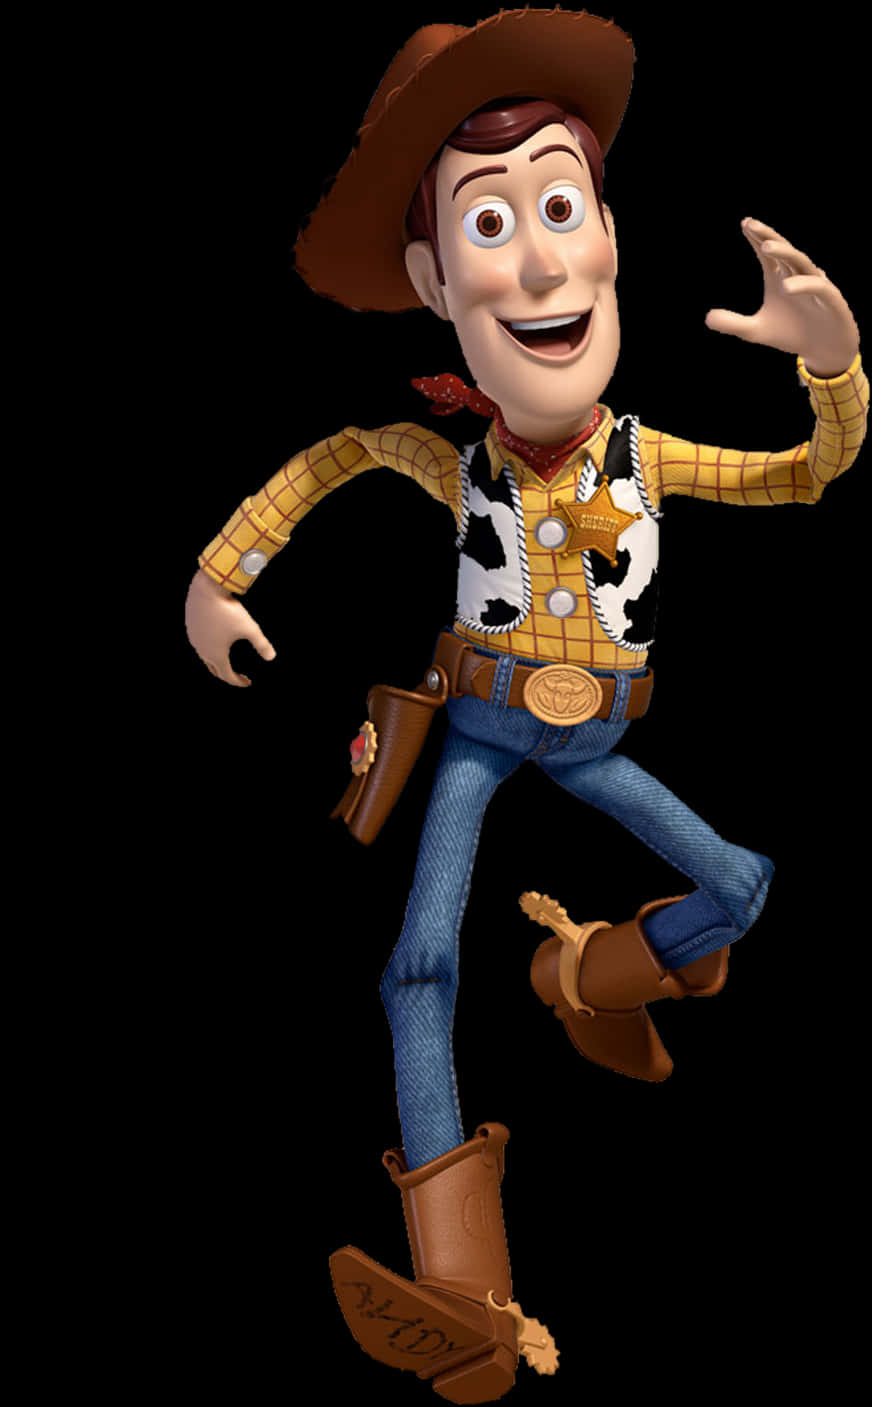 A Cartoon Character Of A Cowboy